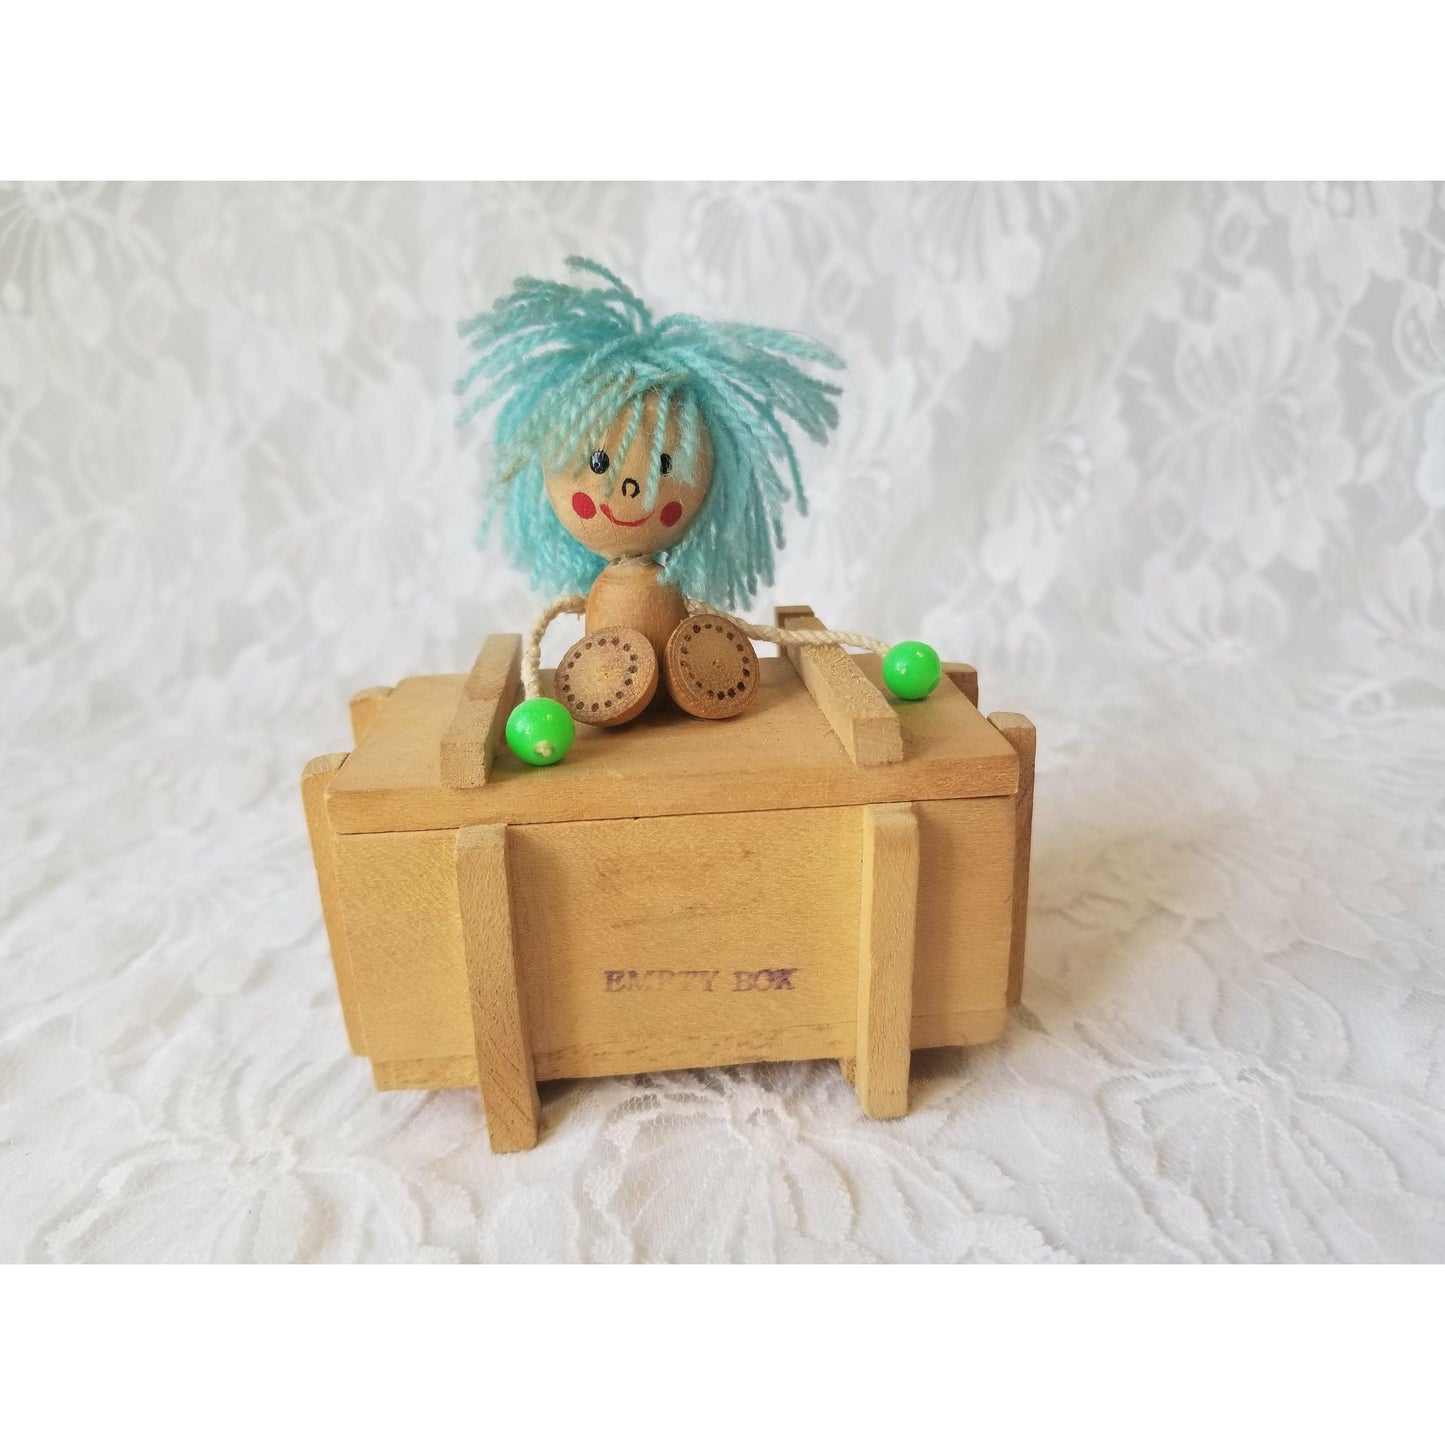 WEIRD Kitschy Vintage 1970s Japanese Doll on Wooden Jewelry Box ~ Watch or Bracelet Box ~ Stash Box ~ Vintage Anime